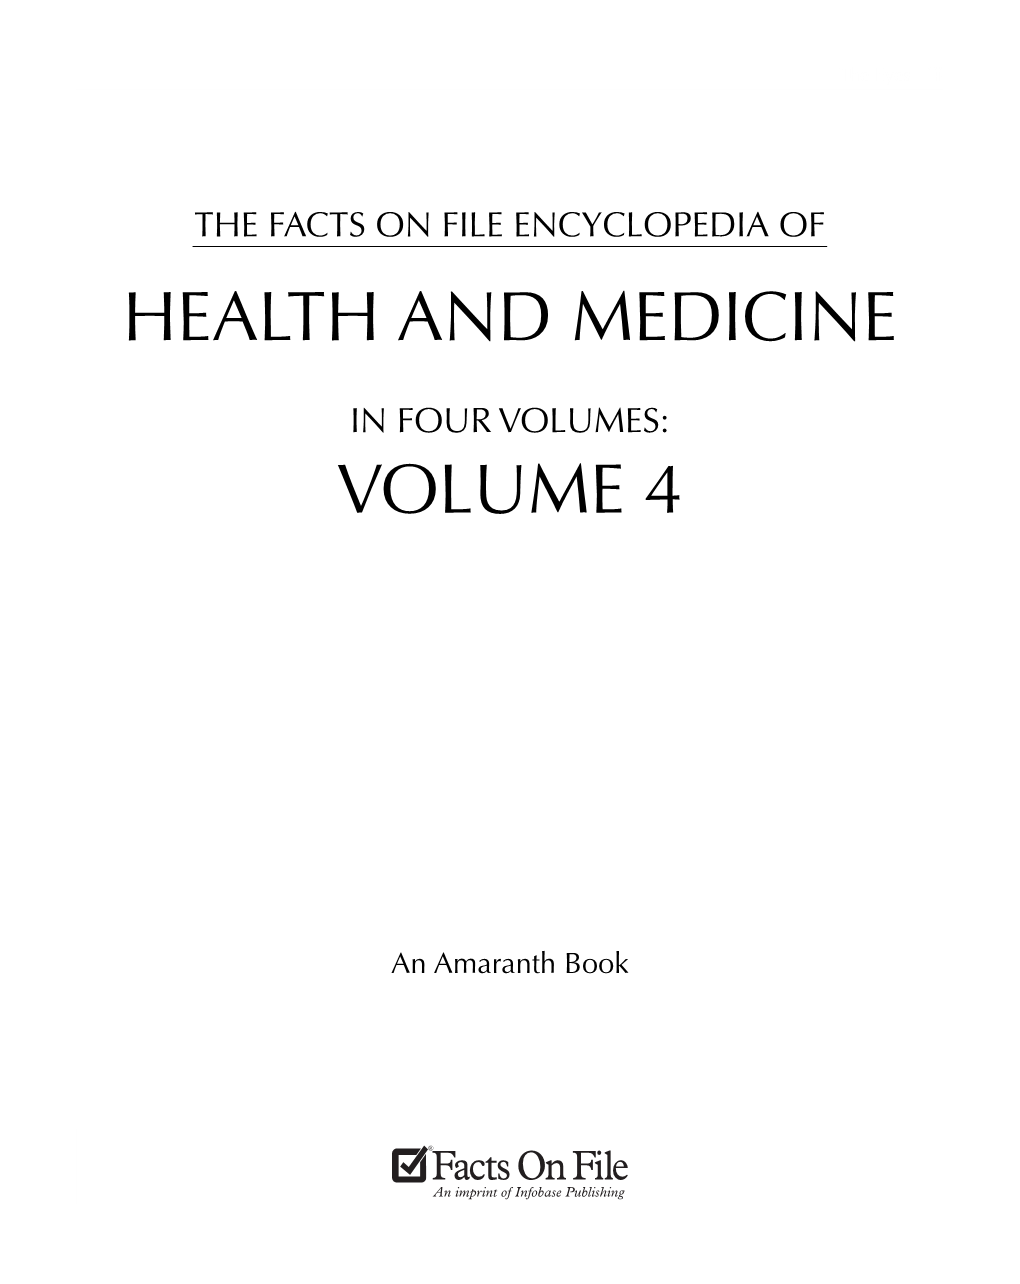 Health and Medicine Volume 4